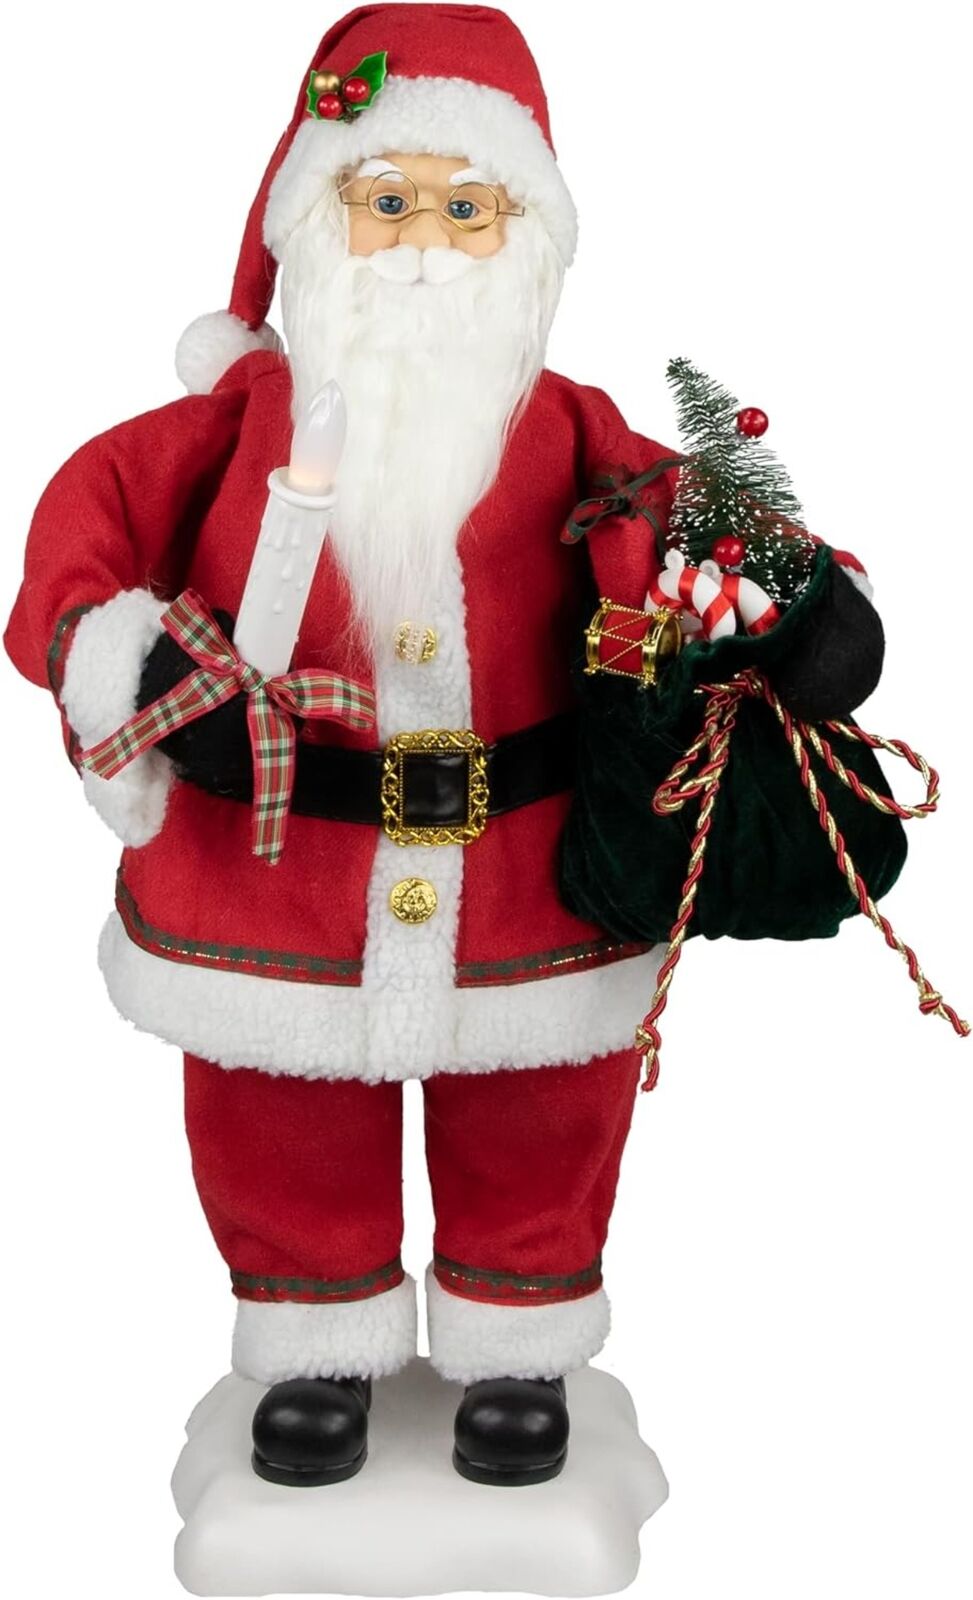 24-Inch Animated Size Animated Christmas Santa Claus Musical Holiday Decor